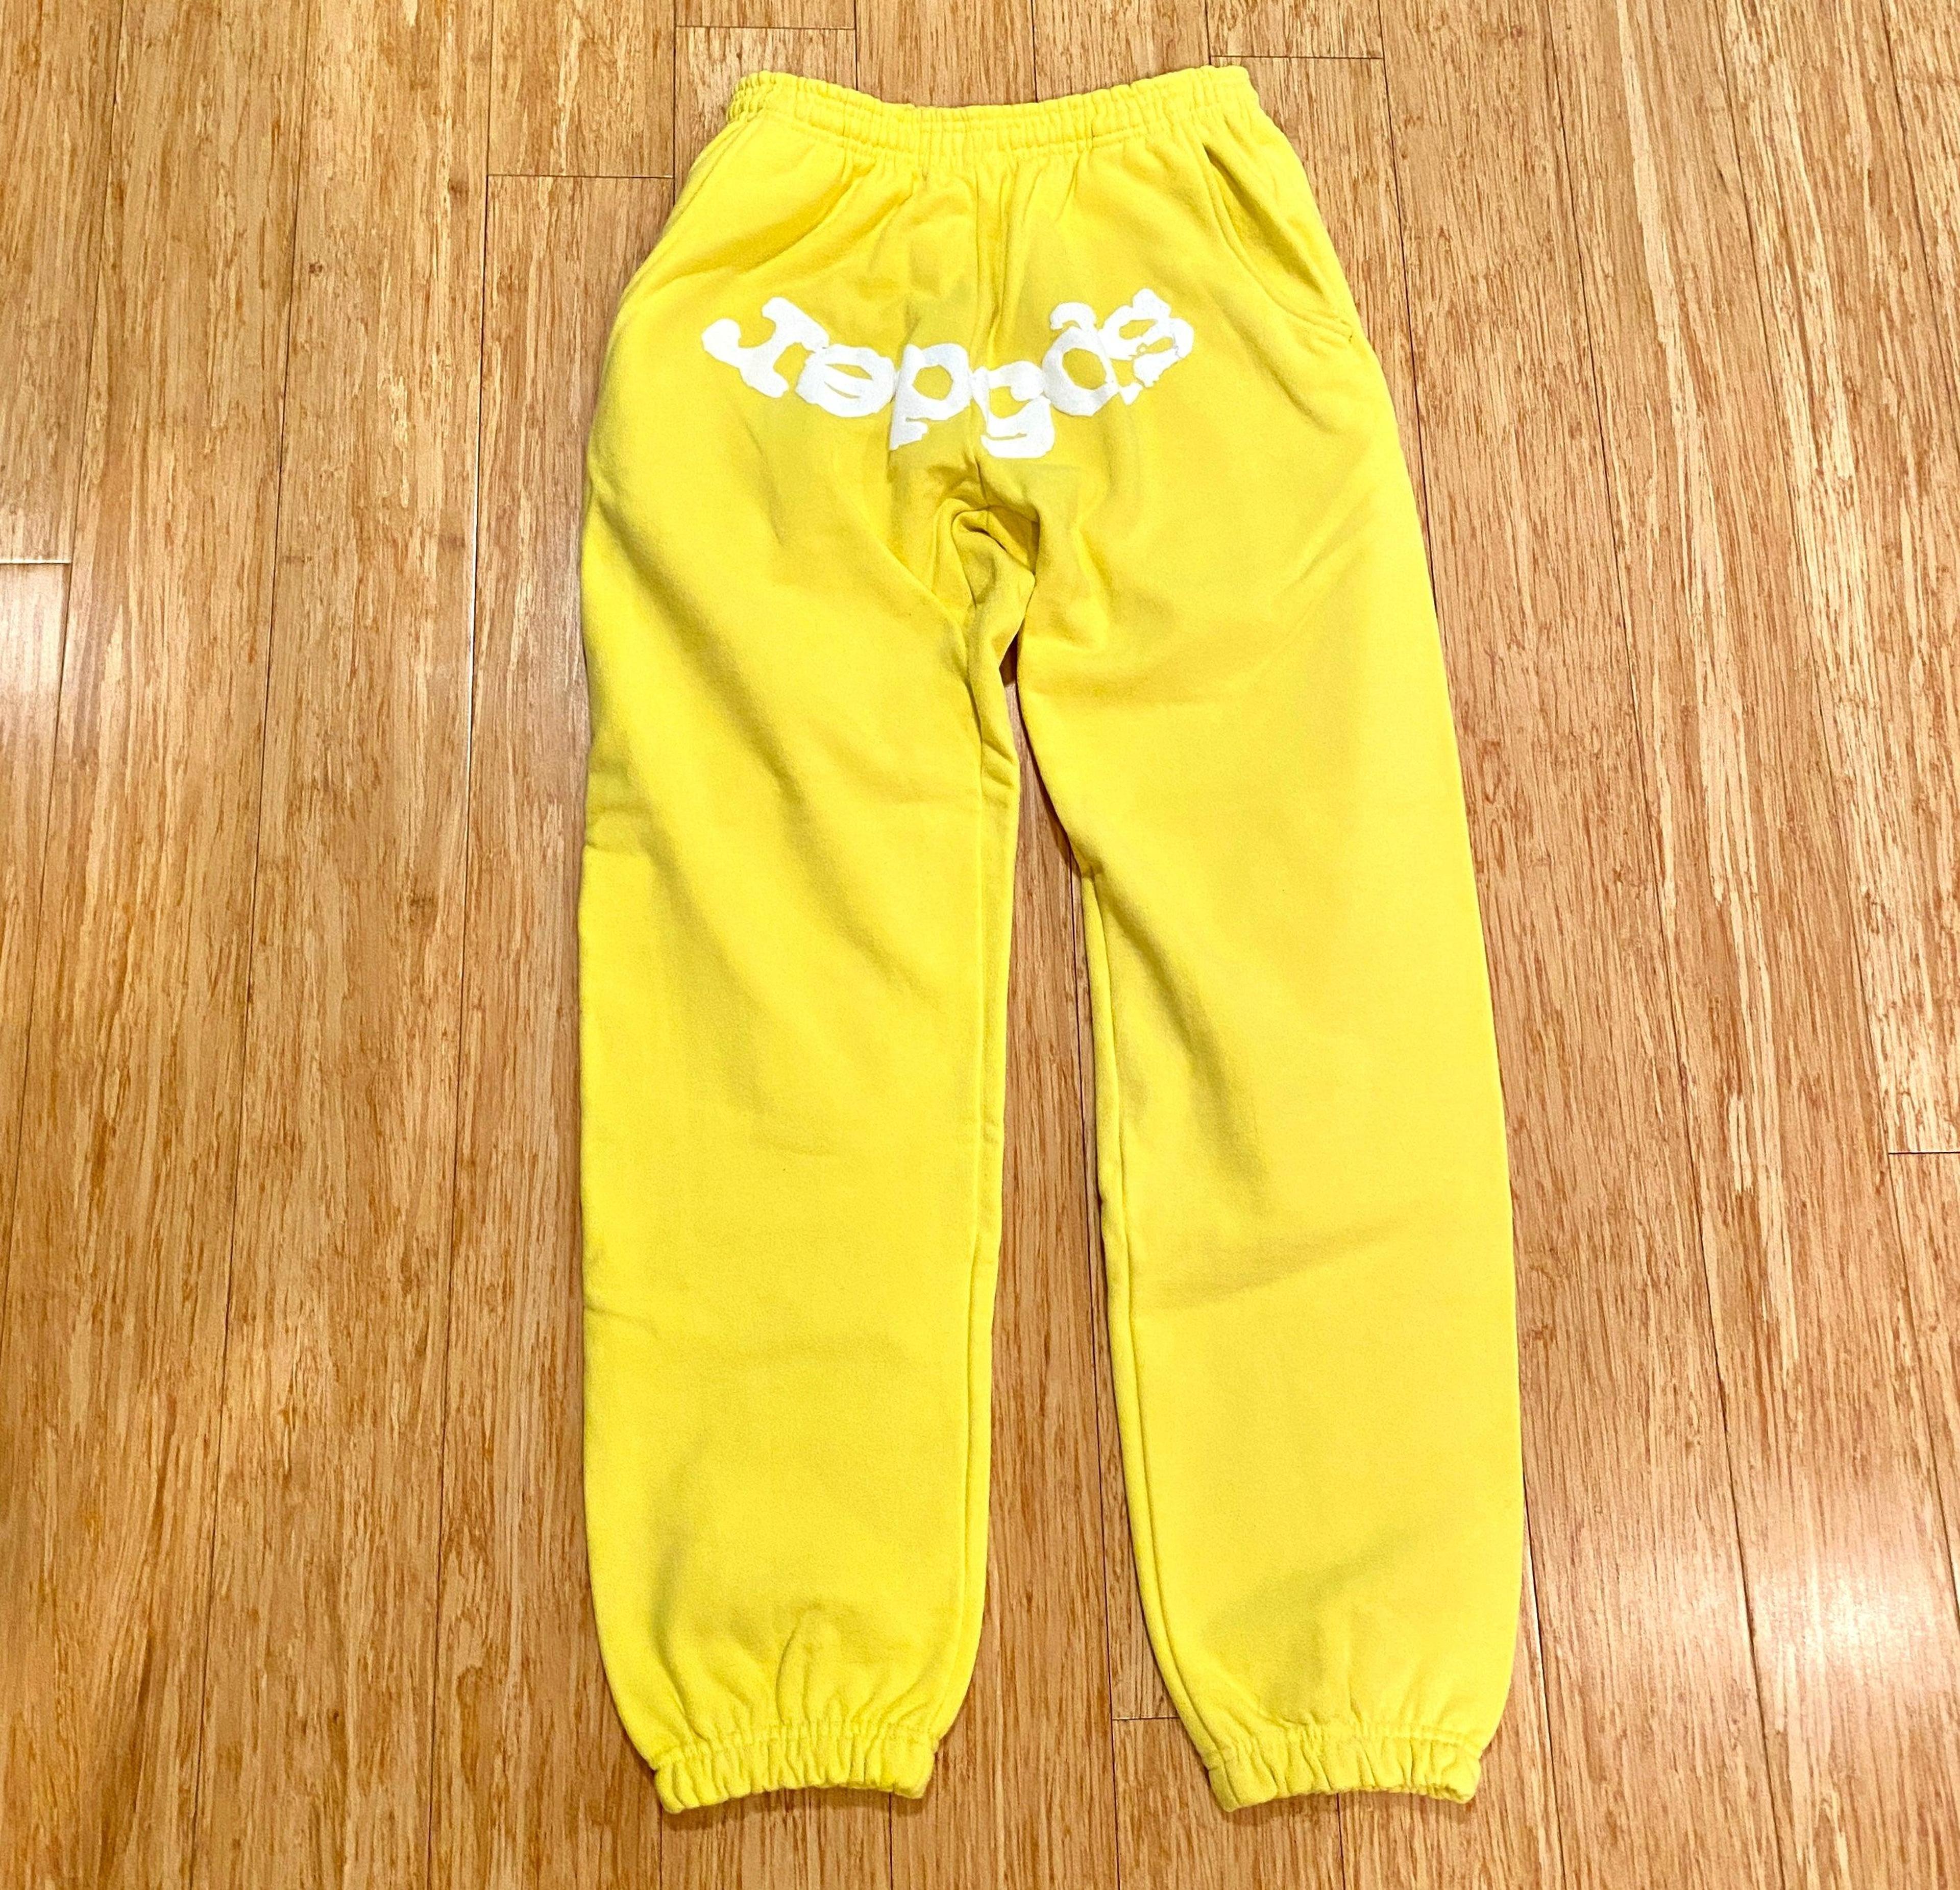 Sp5der Sweatpants Yellow